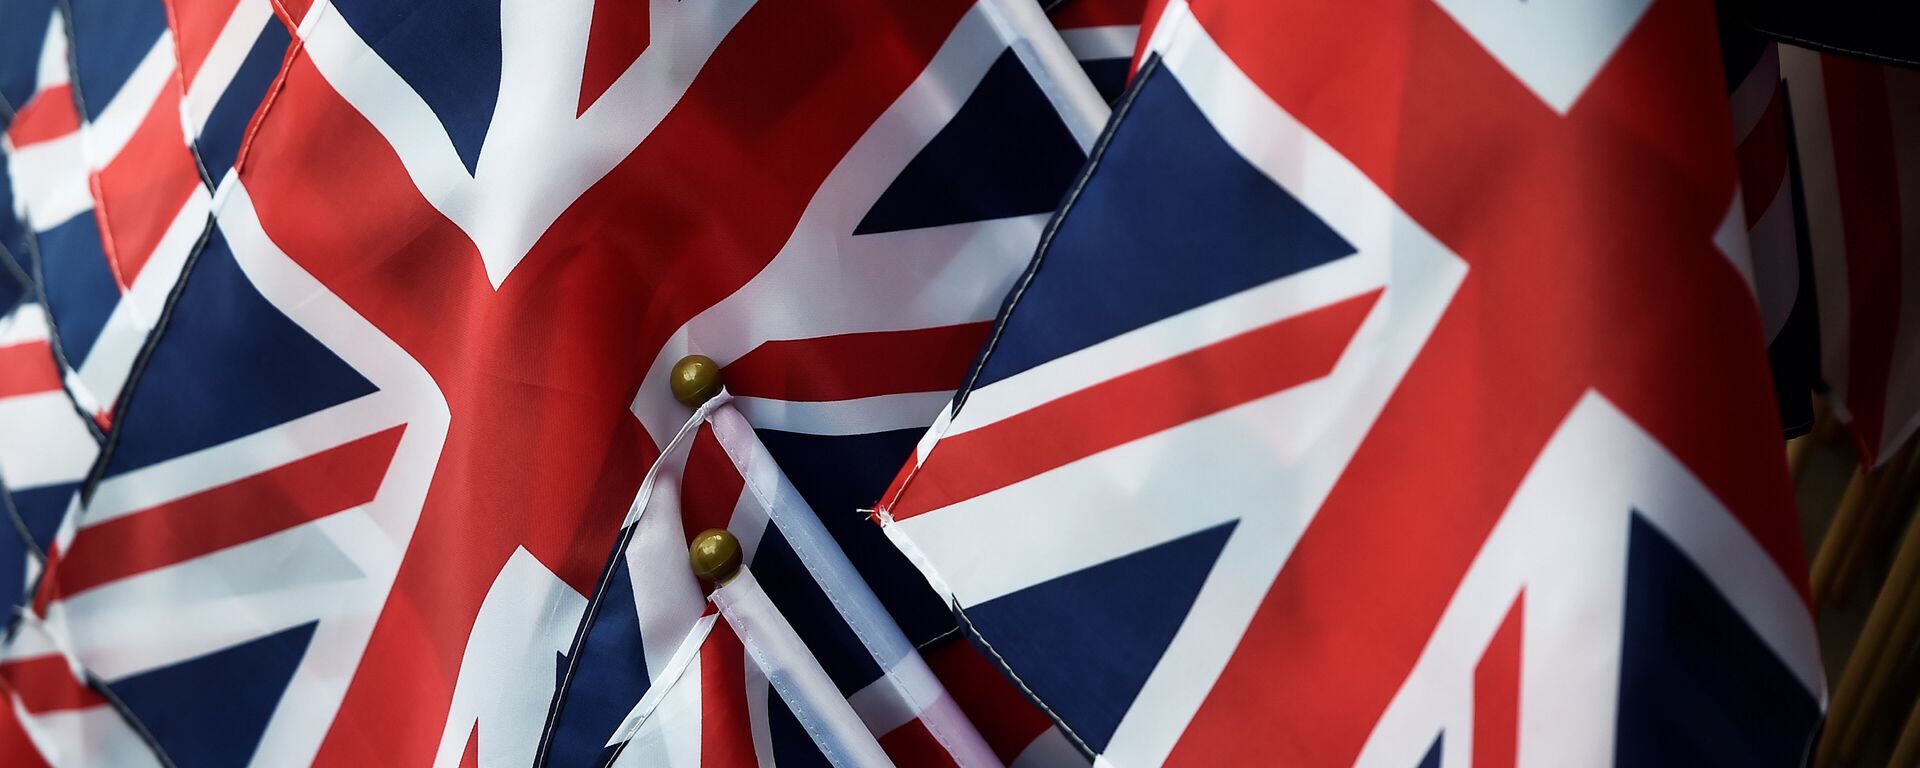 Las banderas del Reino Unido - Sputnik Mundo, 1920, 01.02.2021